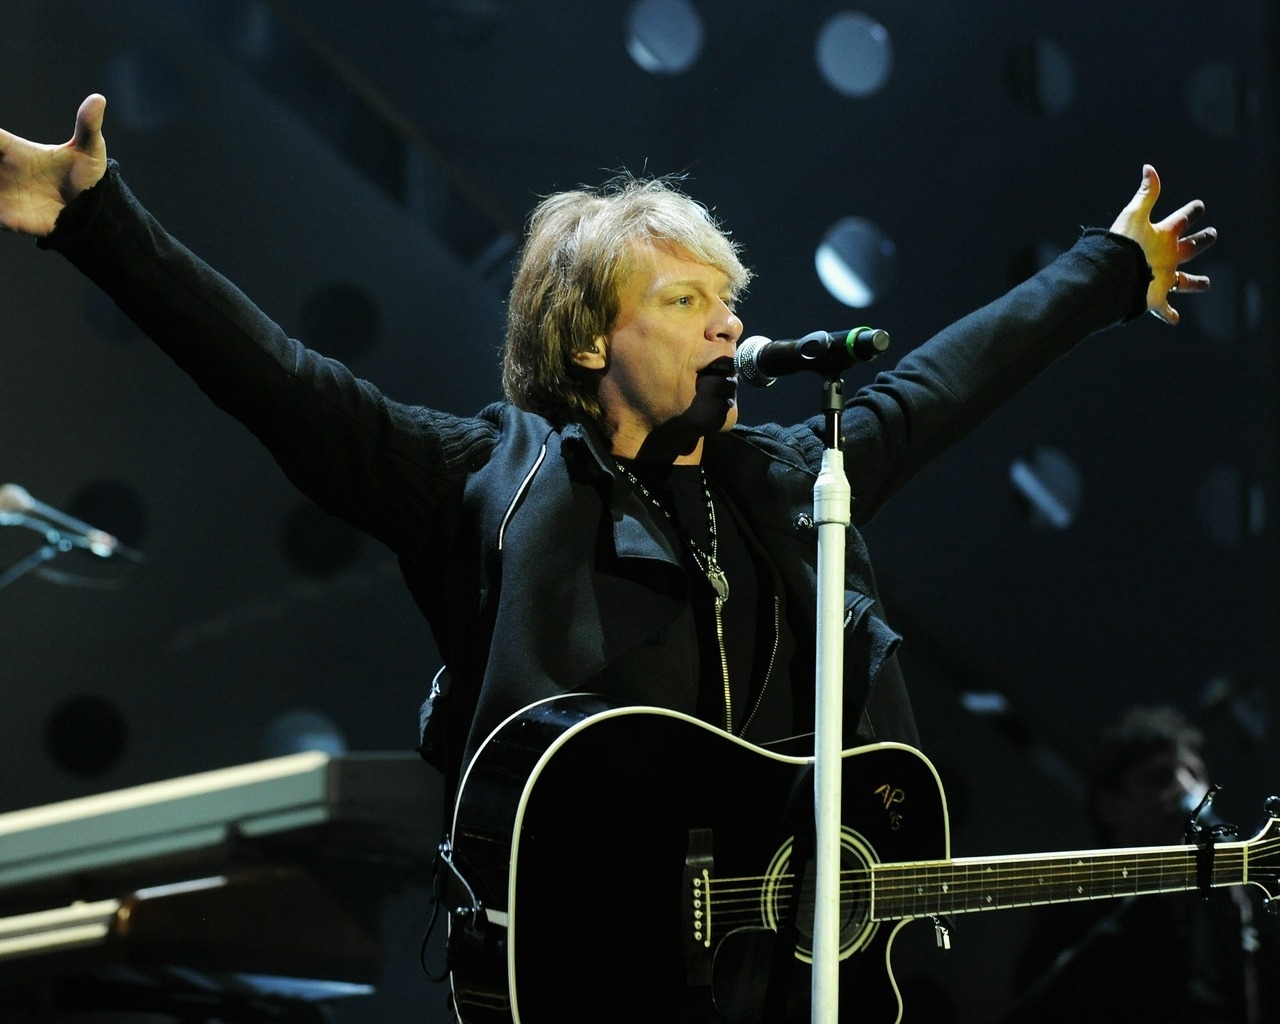 Bon Jovi Live Concert for 1280 x 1024 resolution